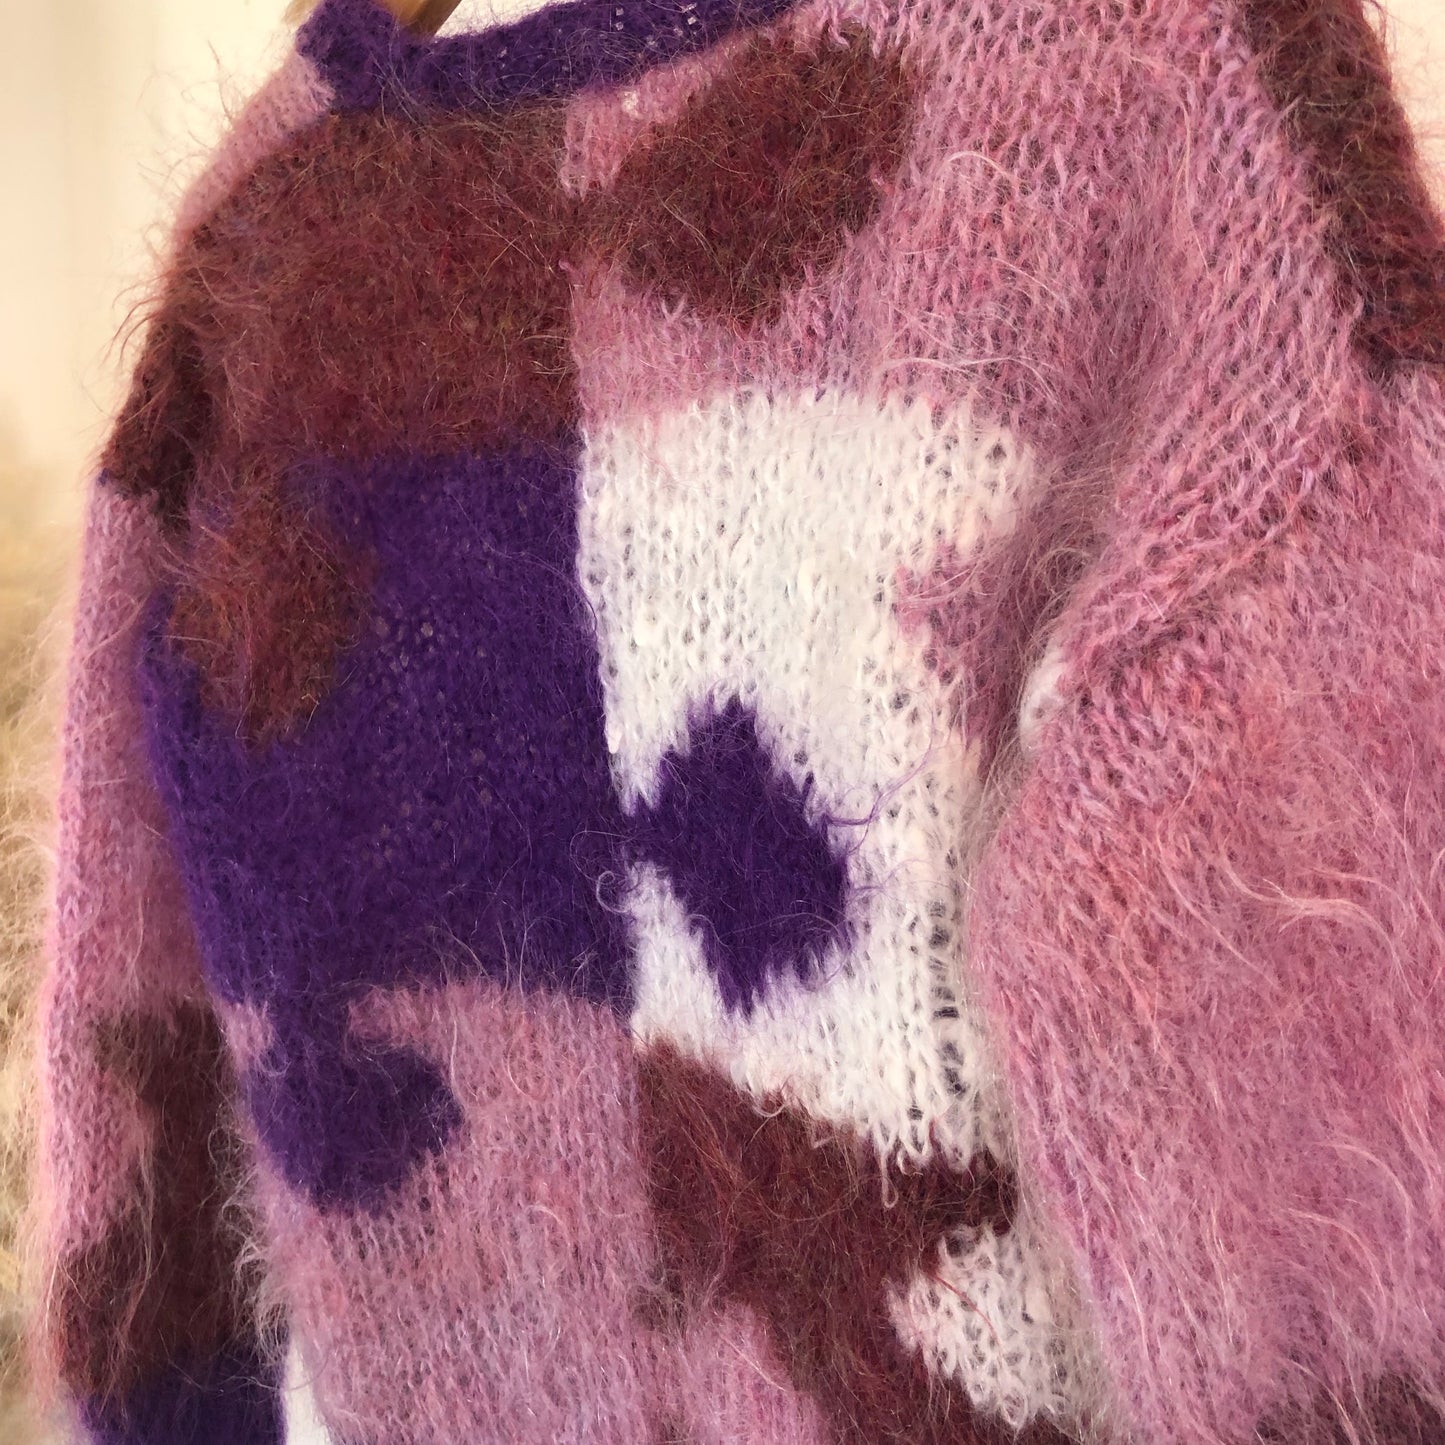 1970s fluffy Soft Purple patch Jumper